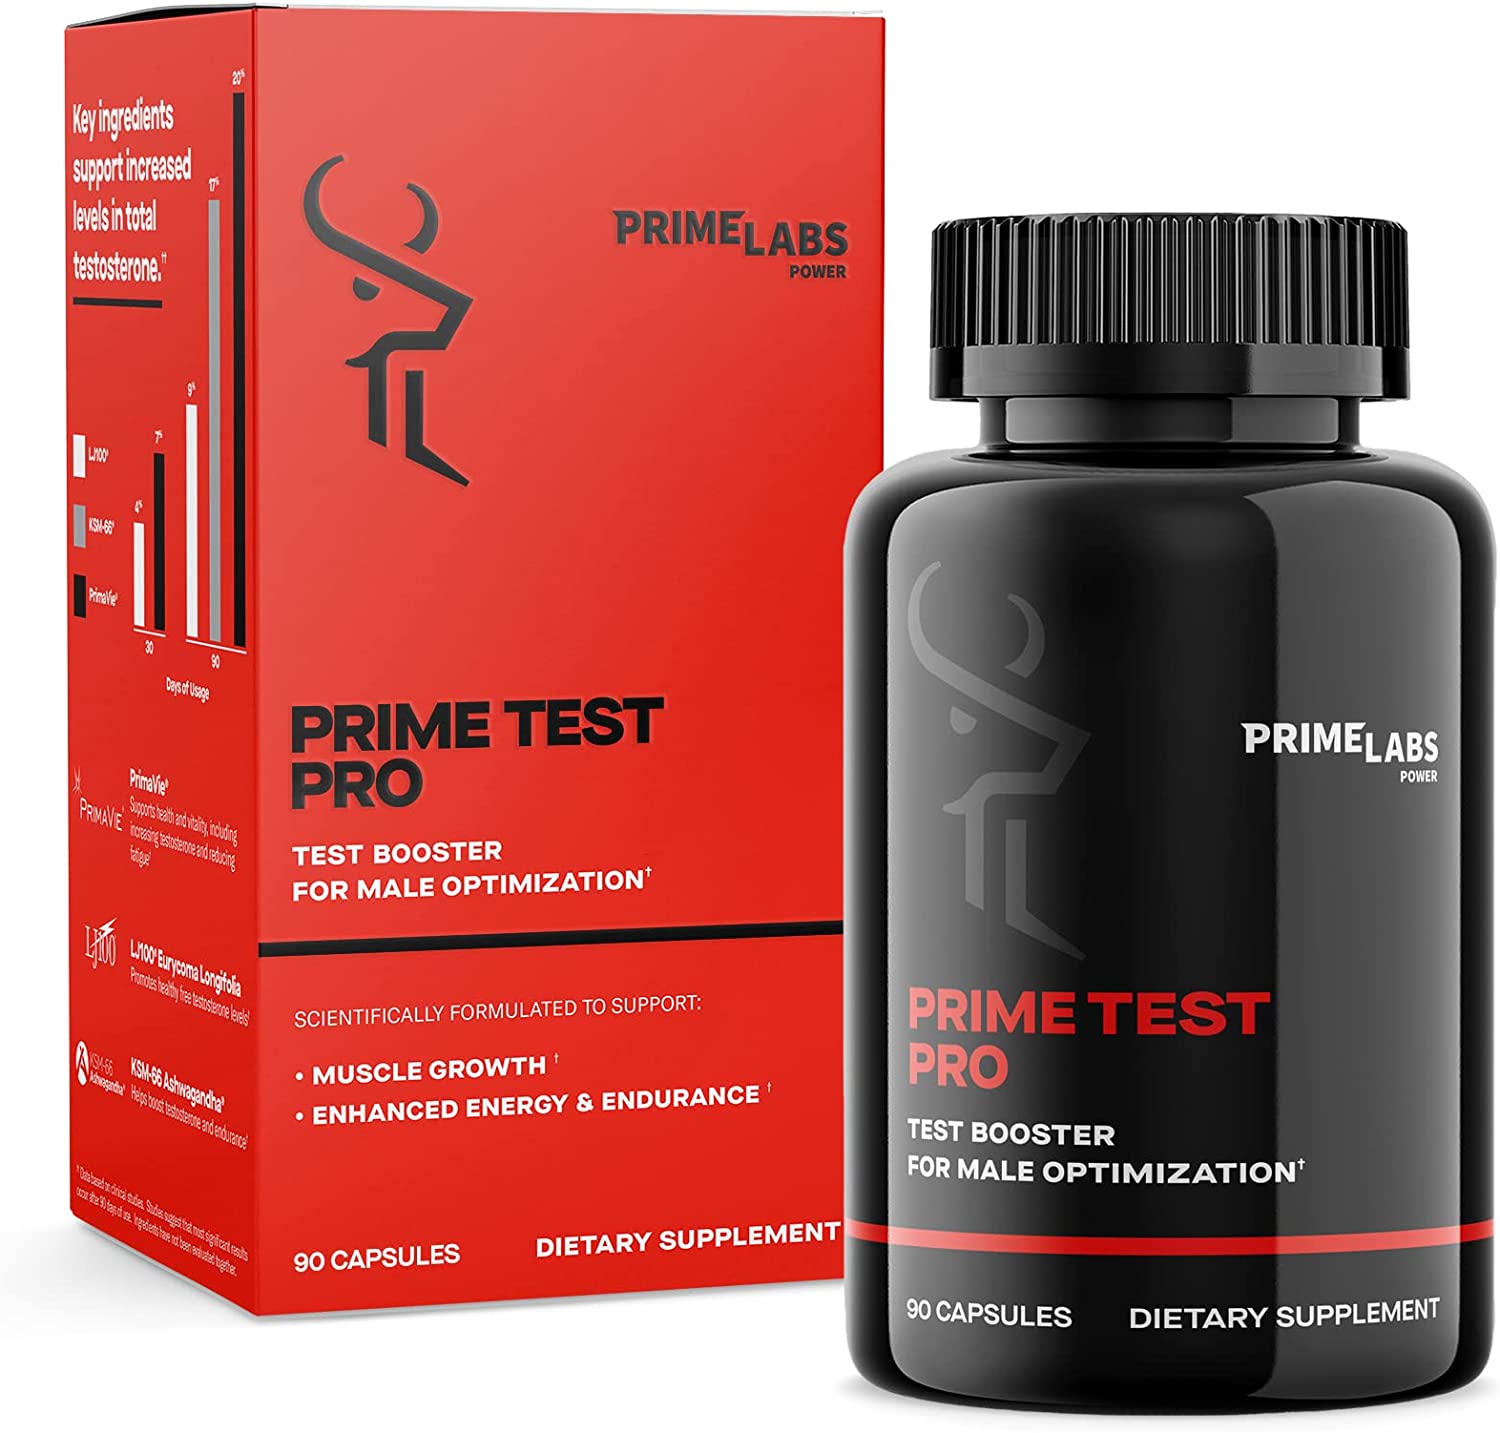 Prime Test Pro image